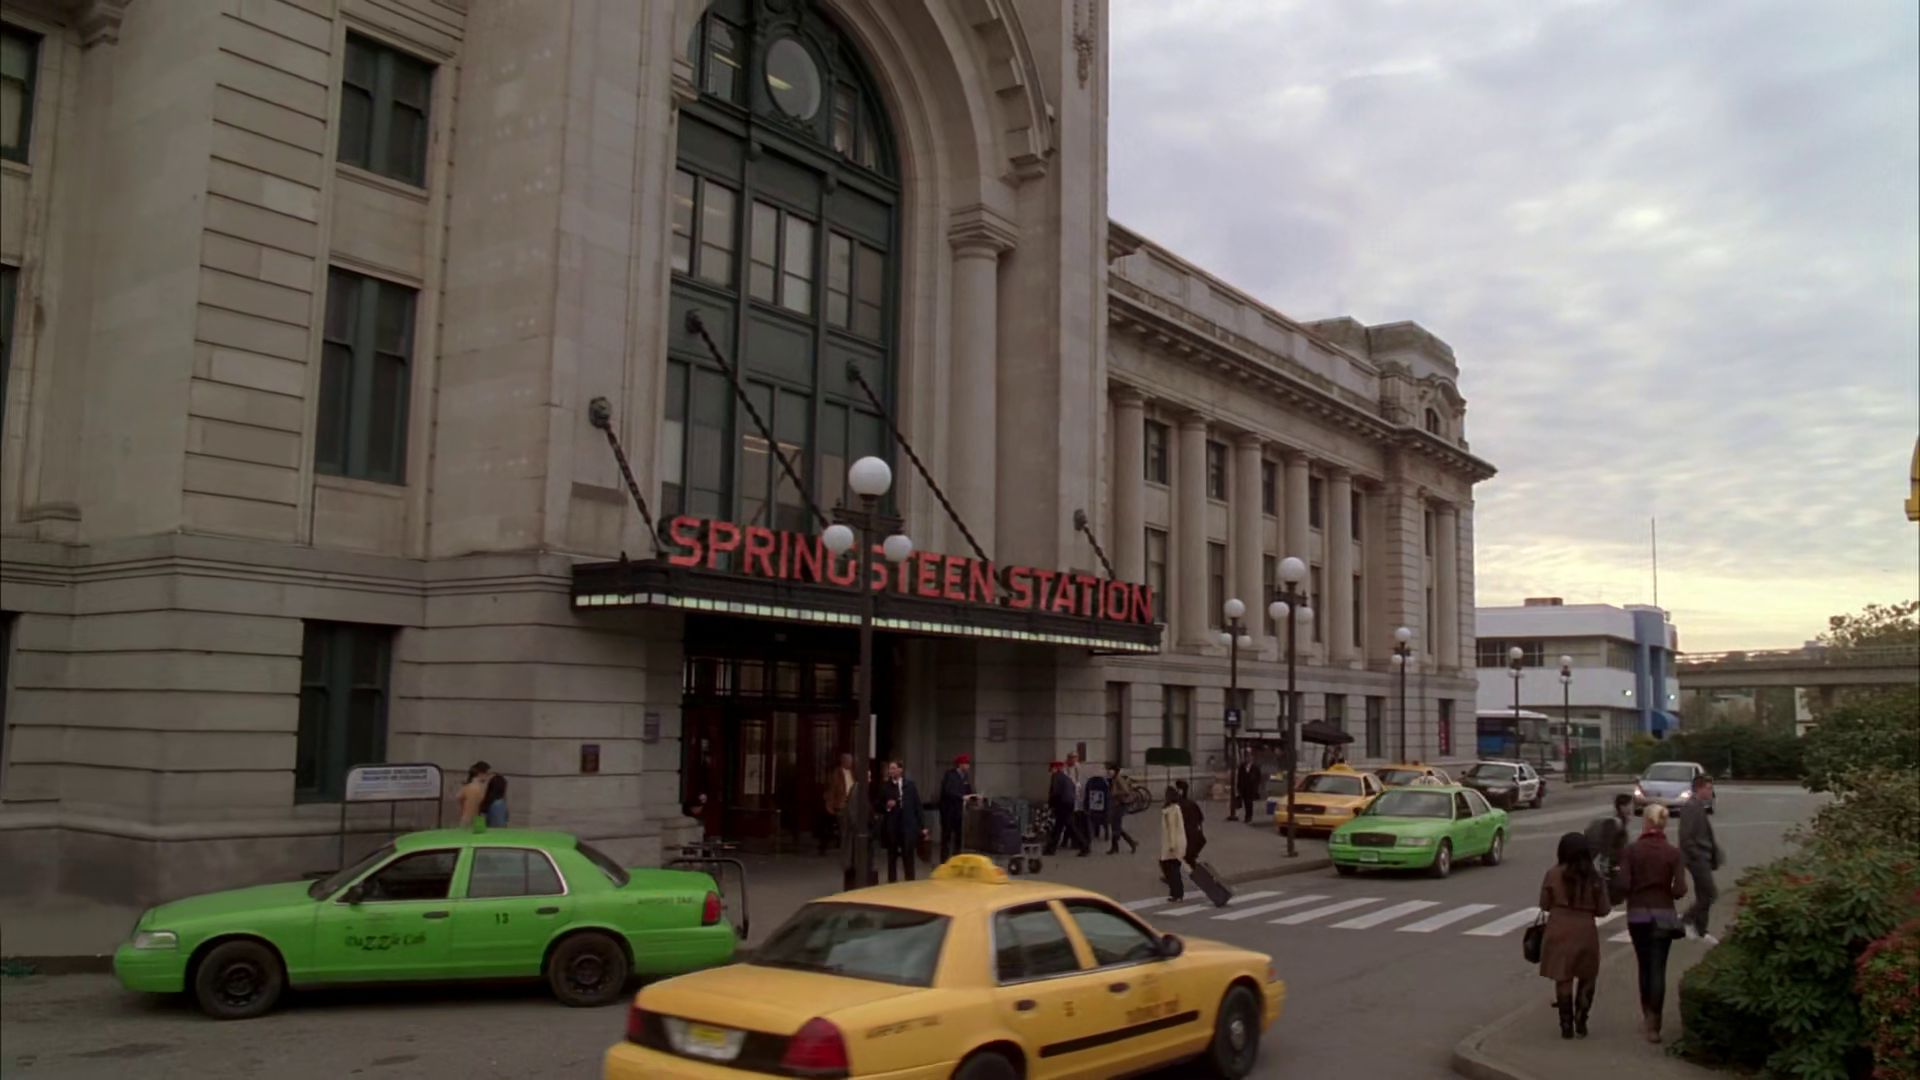 Redverse: <b>Image 1:</b> Springsteen Station